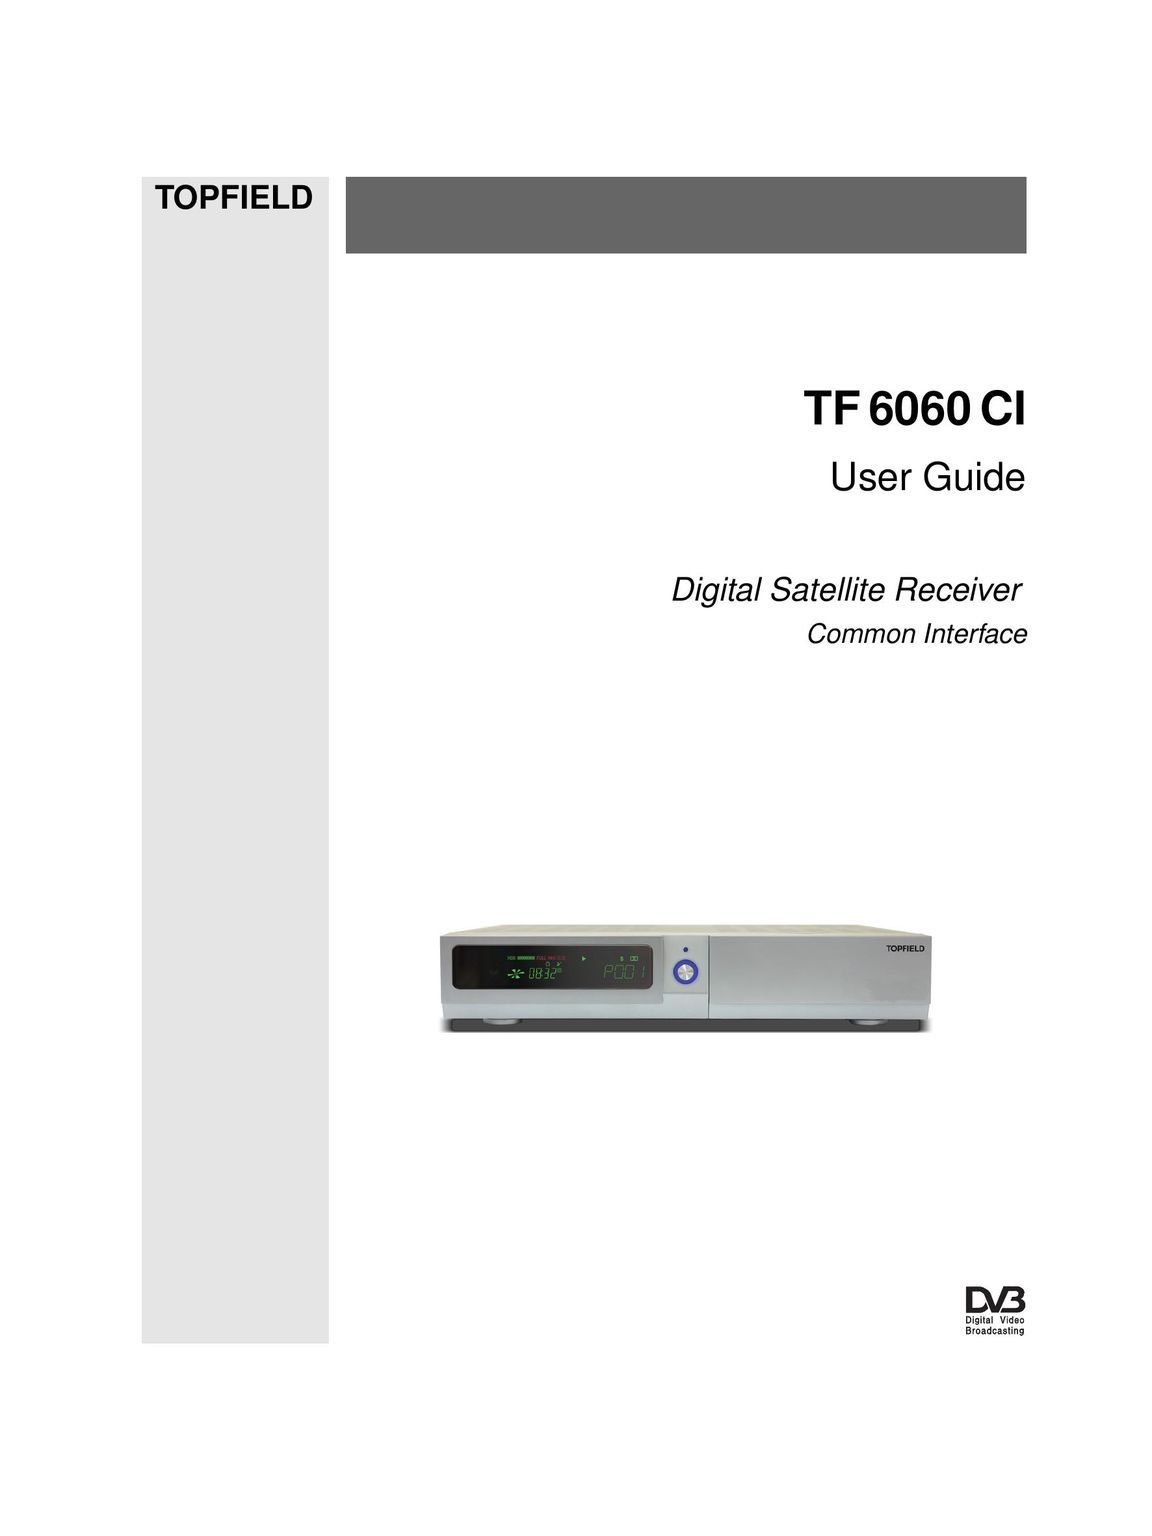 Topfield TF 6060 CI Car Satellite TV System User Manual